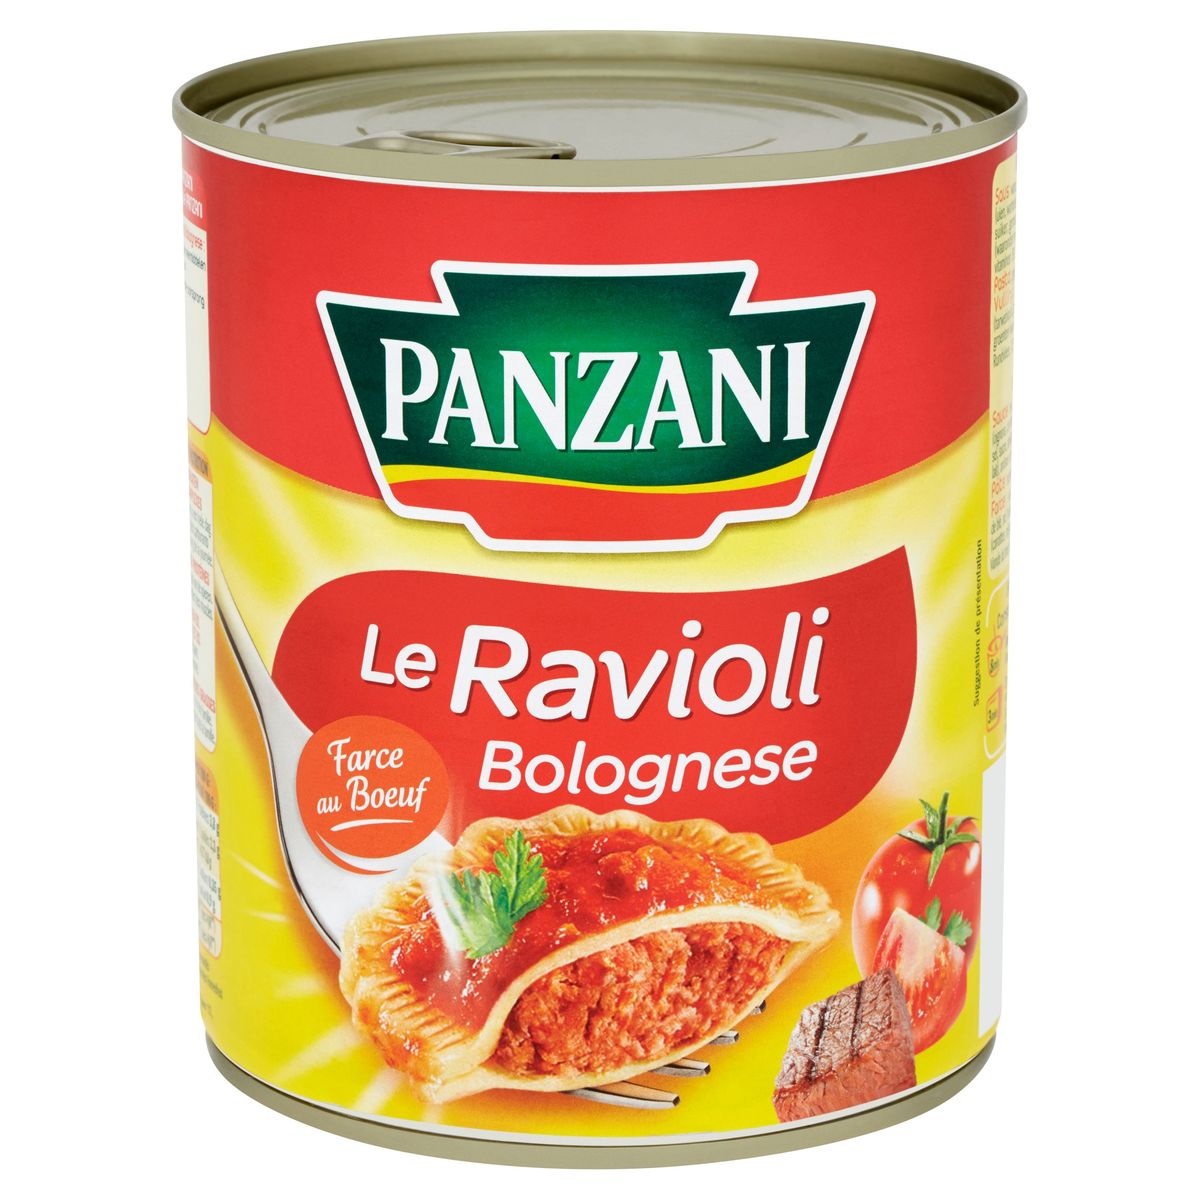 Panzani Le ravioli bolognese farce au boeuf 800 g